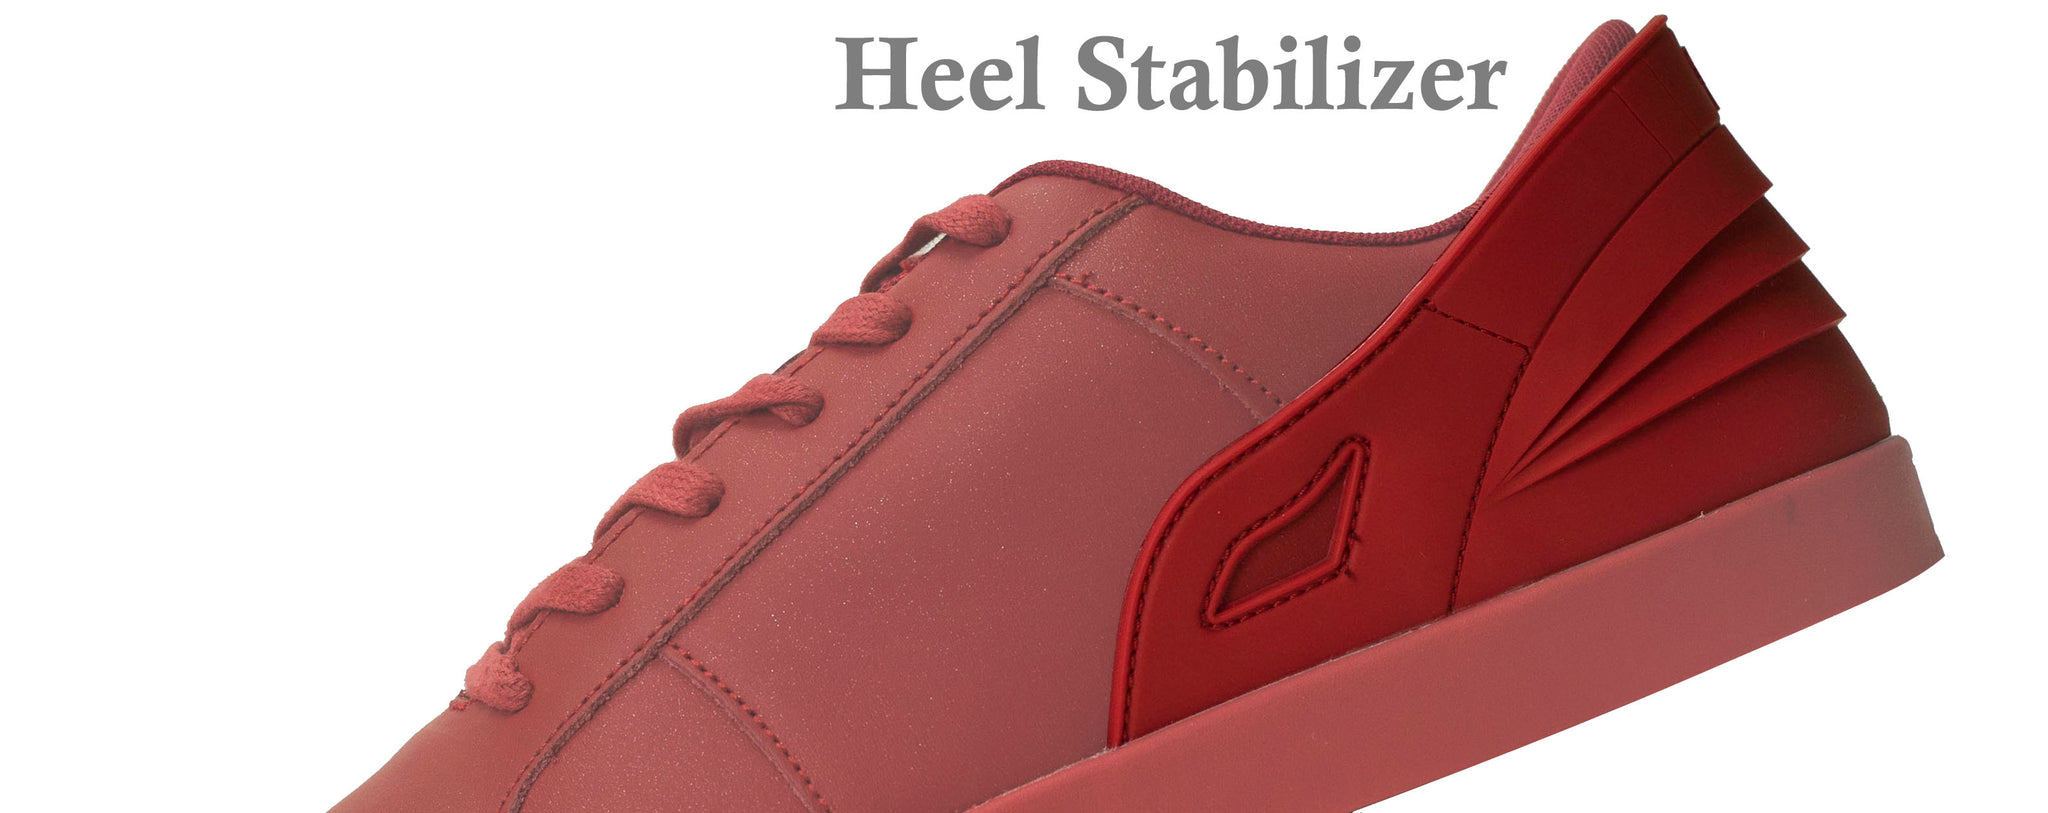 Triesti Shell: Light Feet Video & Heel Stabilzer